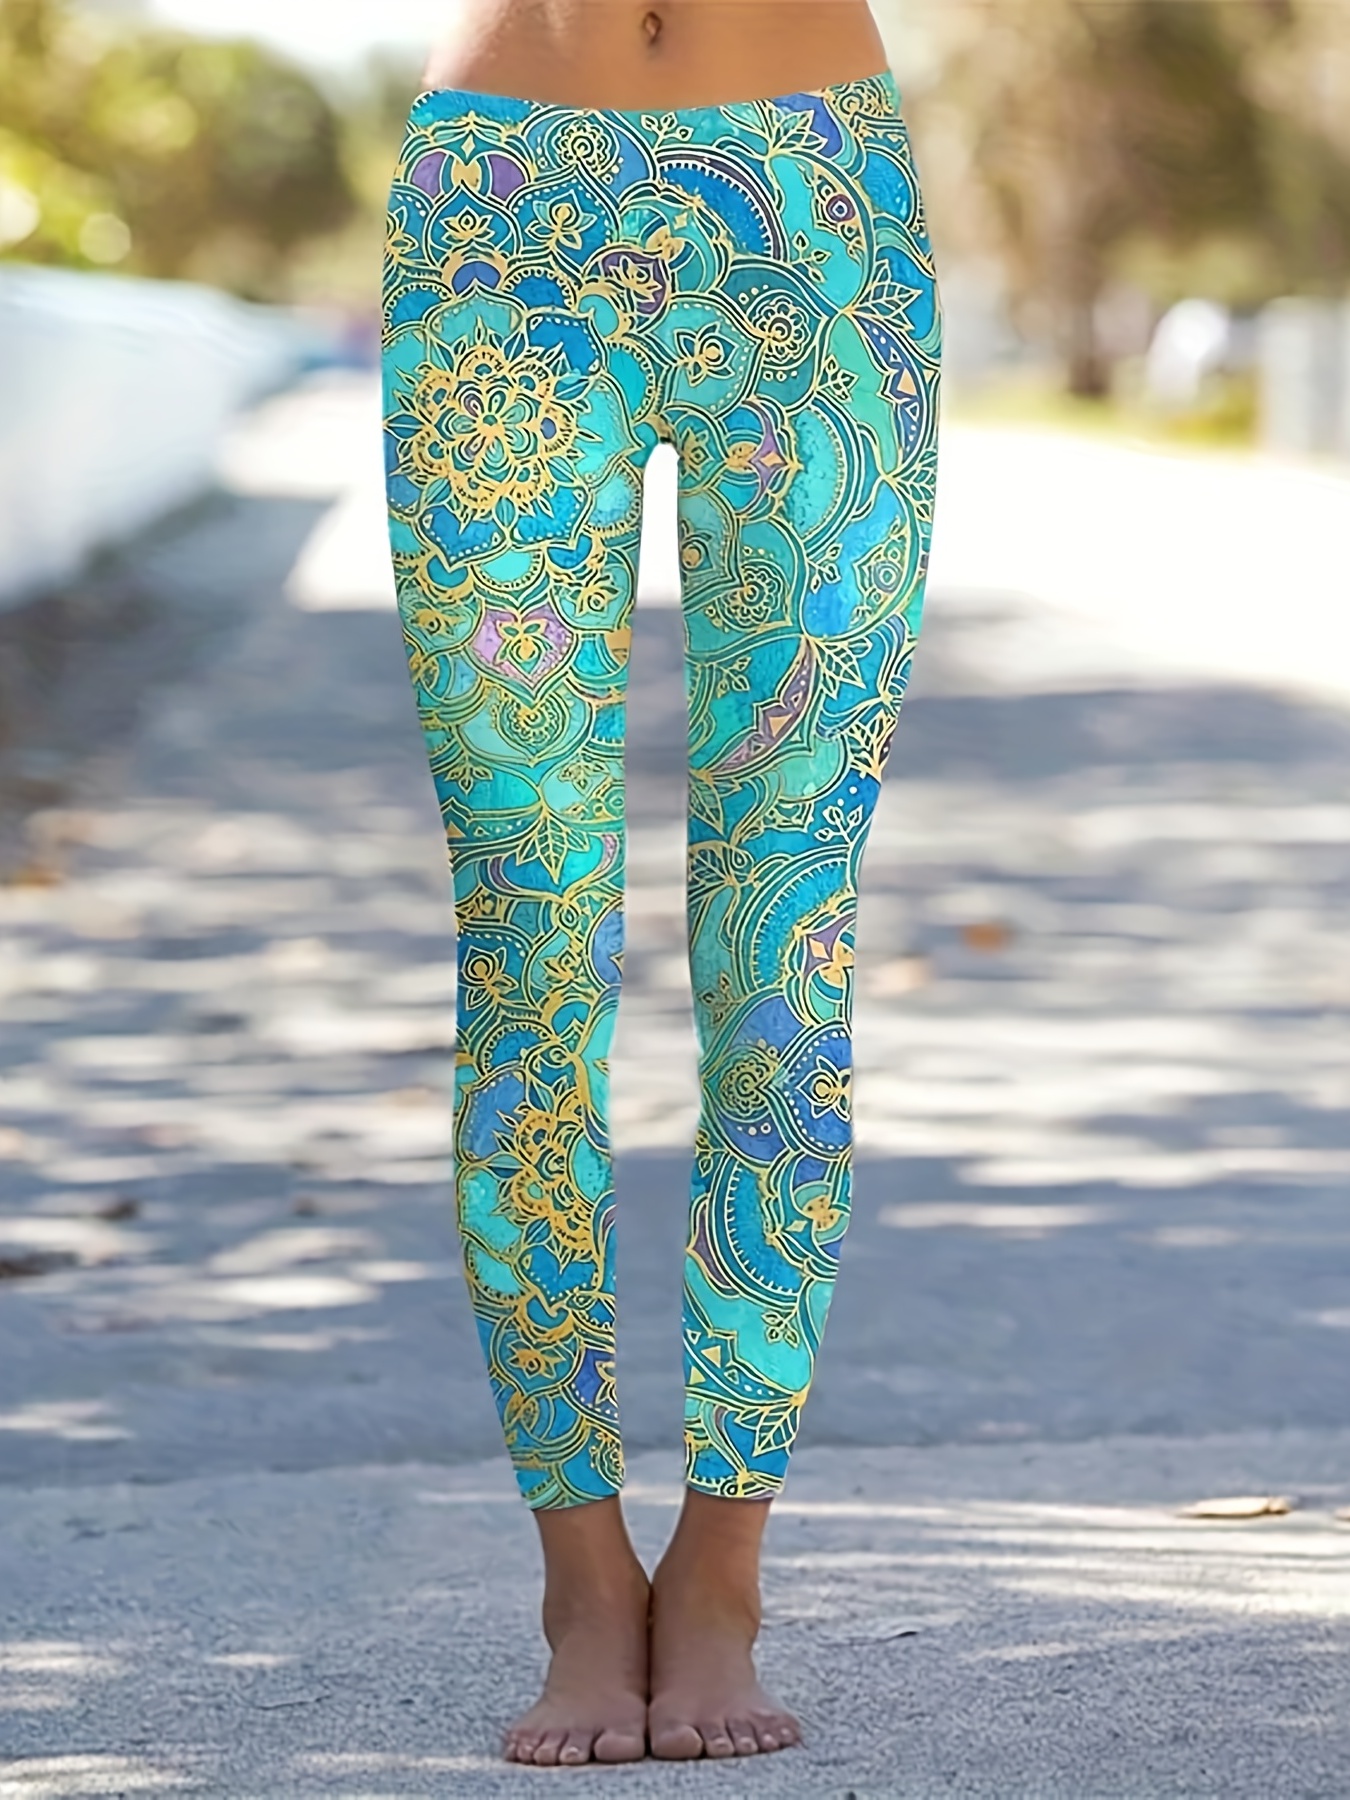 Mandala Leggings, Yoga Pants, Colorful Patterned High Waist